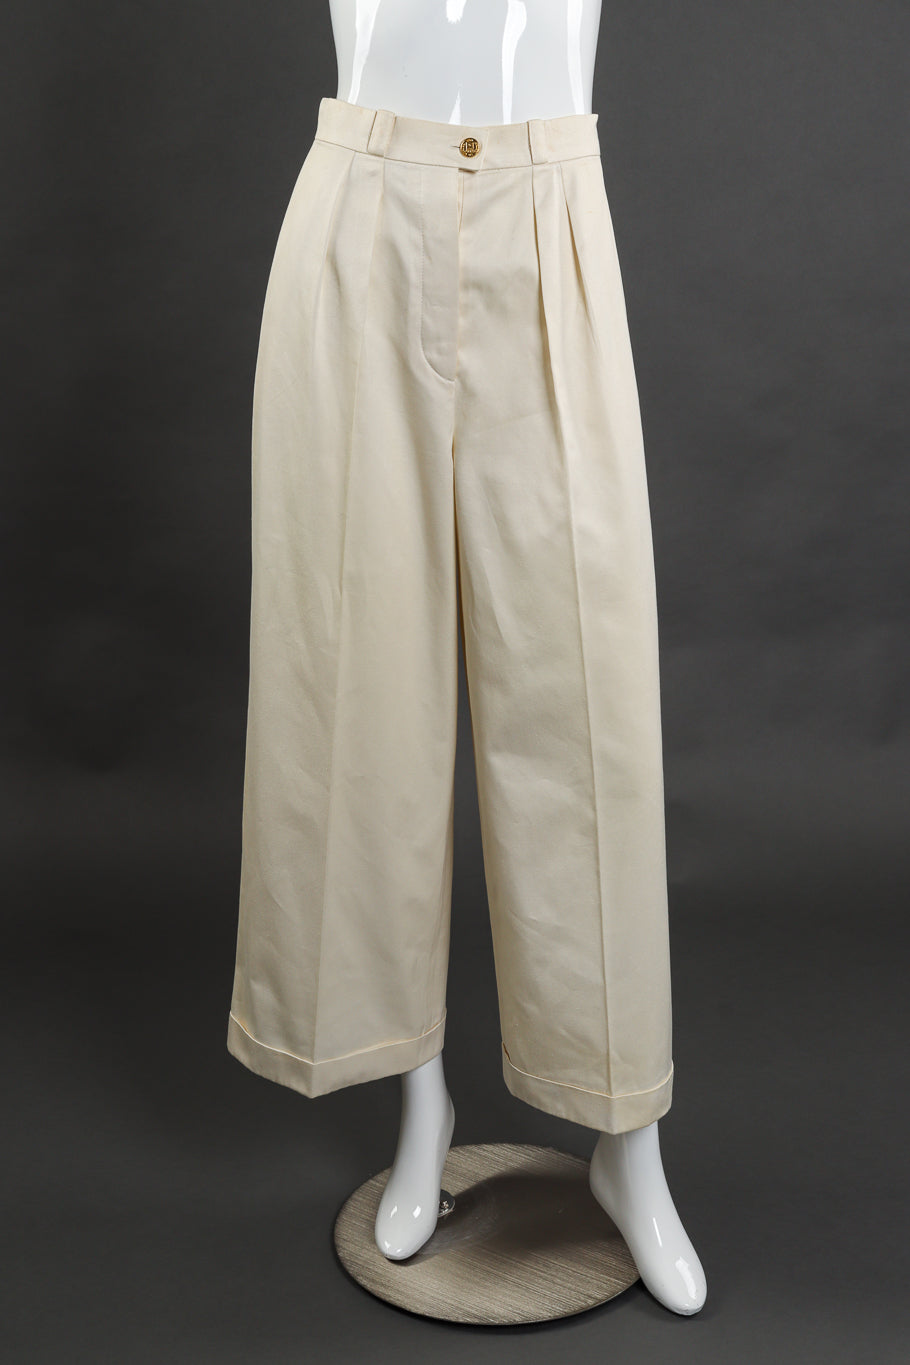 Jean Paul Gaultier Suspender Pants at 1stDibs